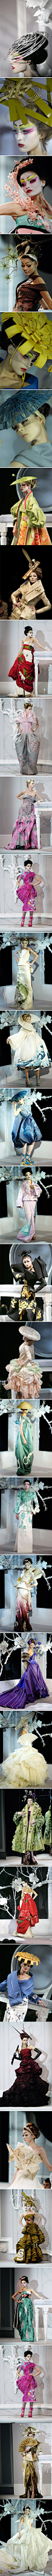 【囤资料】…风格中毒……估计图刷不开颗颗颗颗颗………《Christian Dior Haute Couture Spring 2007》